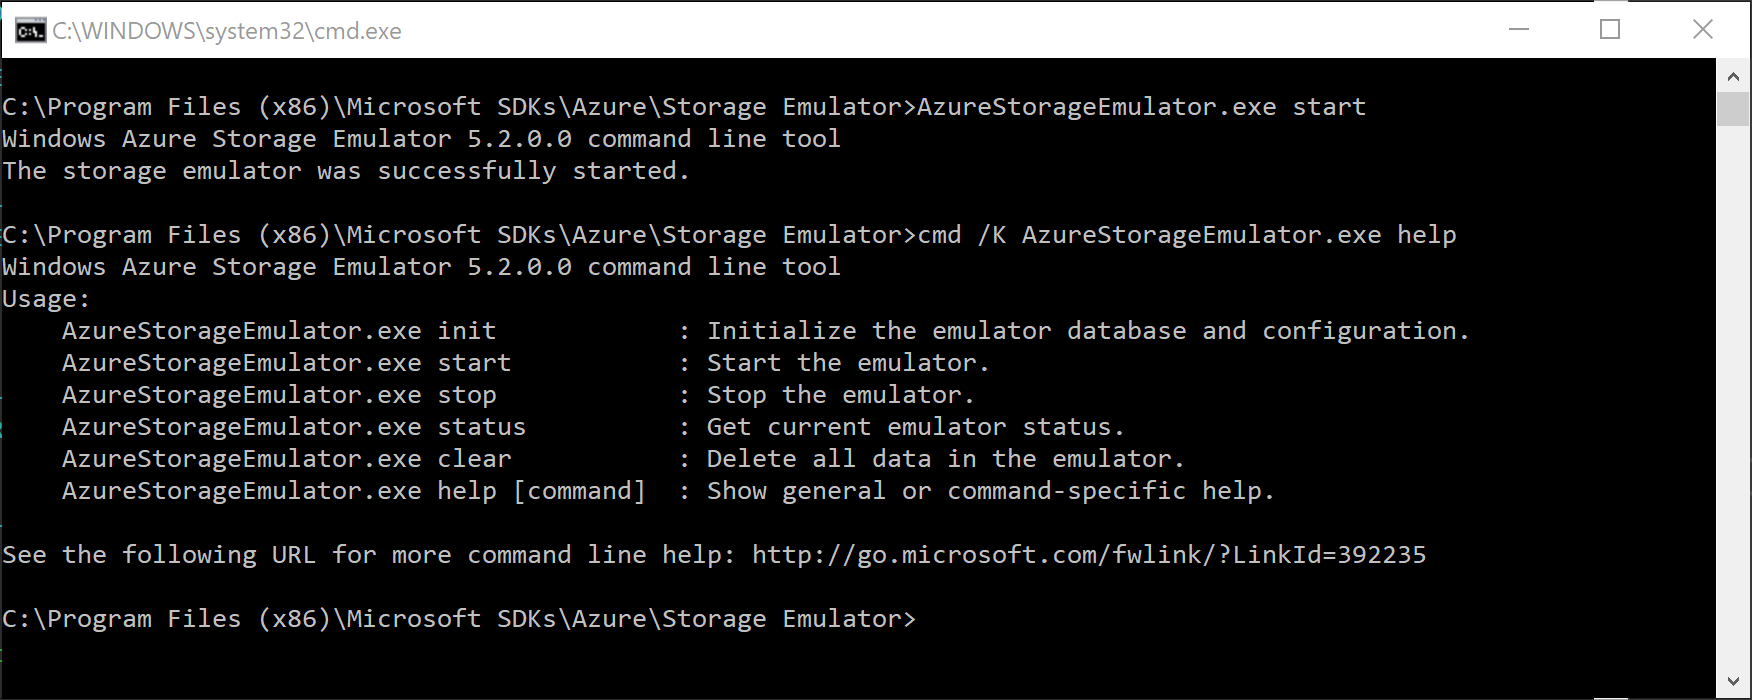 Azure Storage Emulator is started